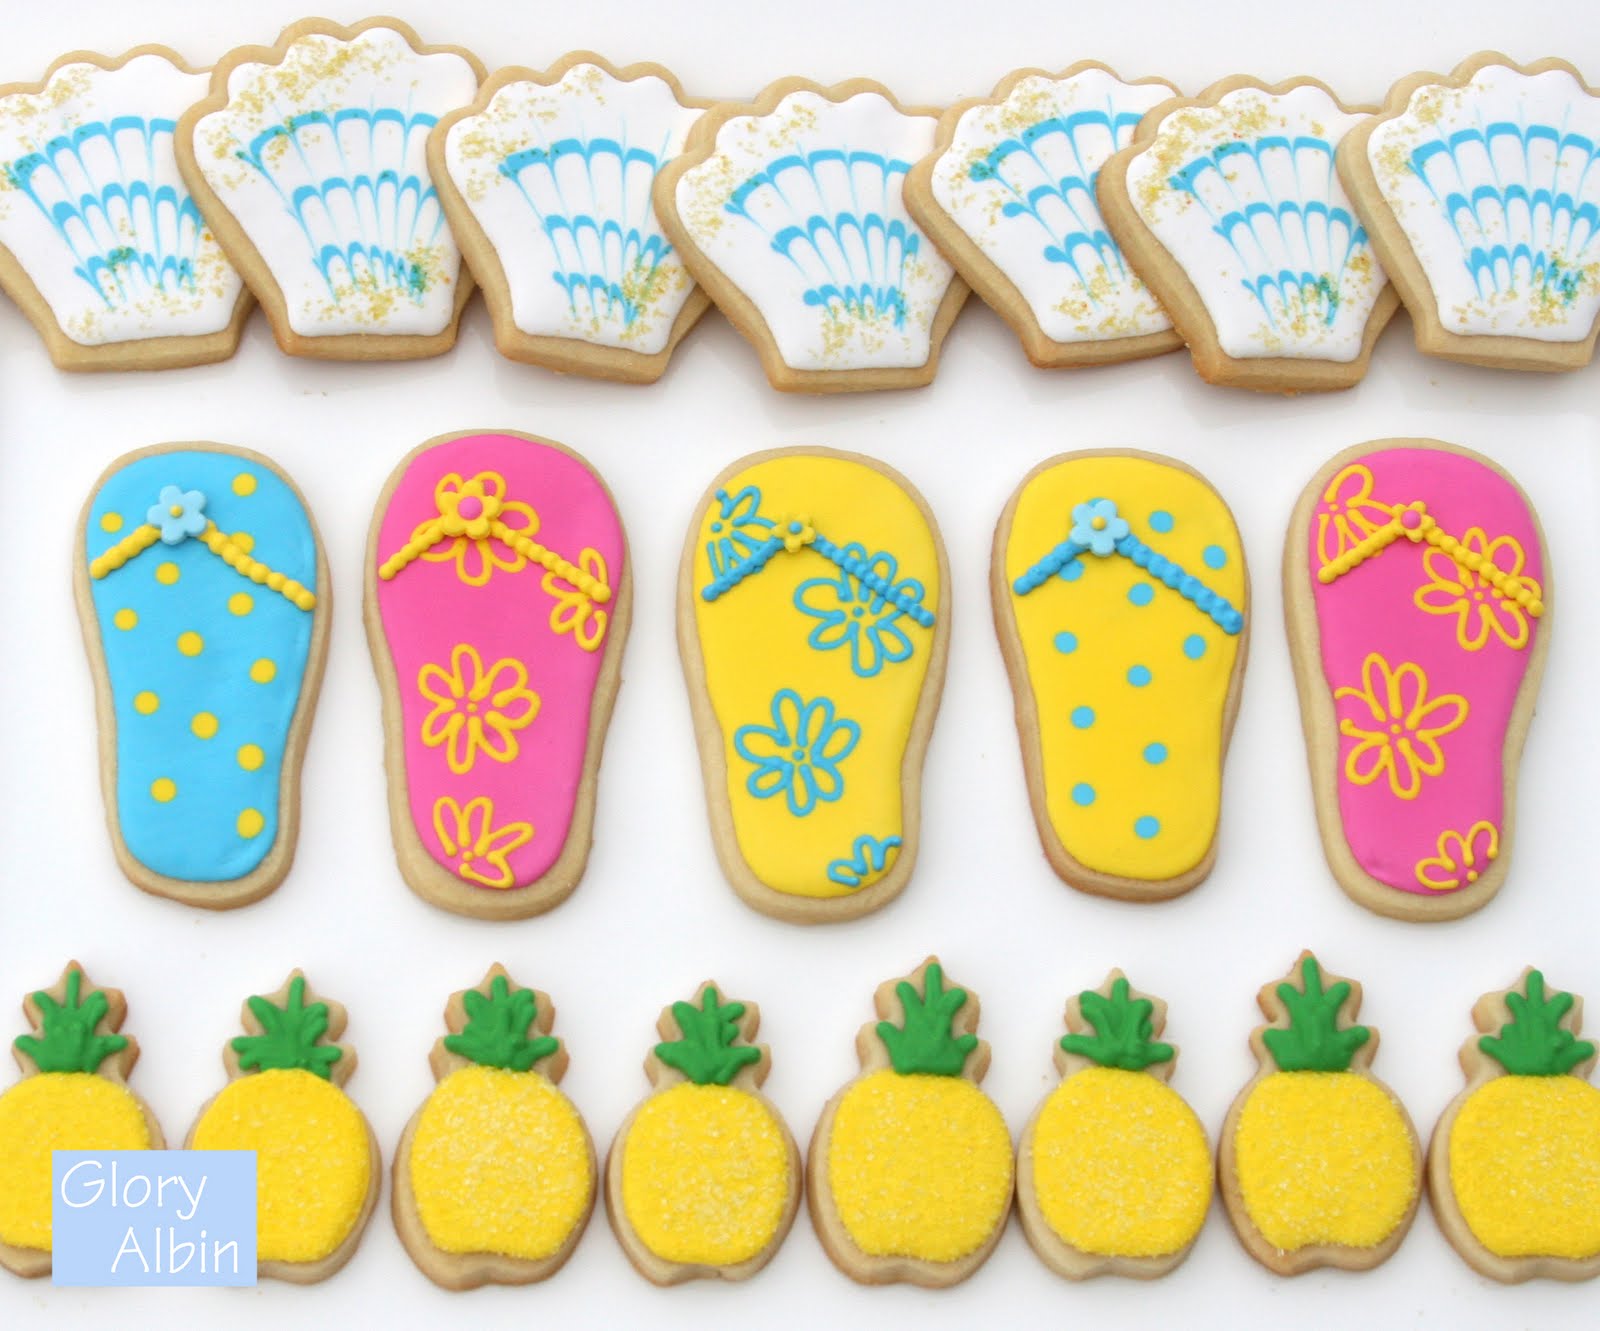 Decorating Sugar Cookies With Royal Icing Glorious Treats